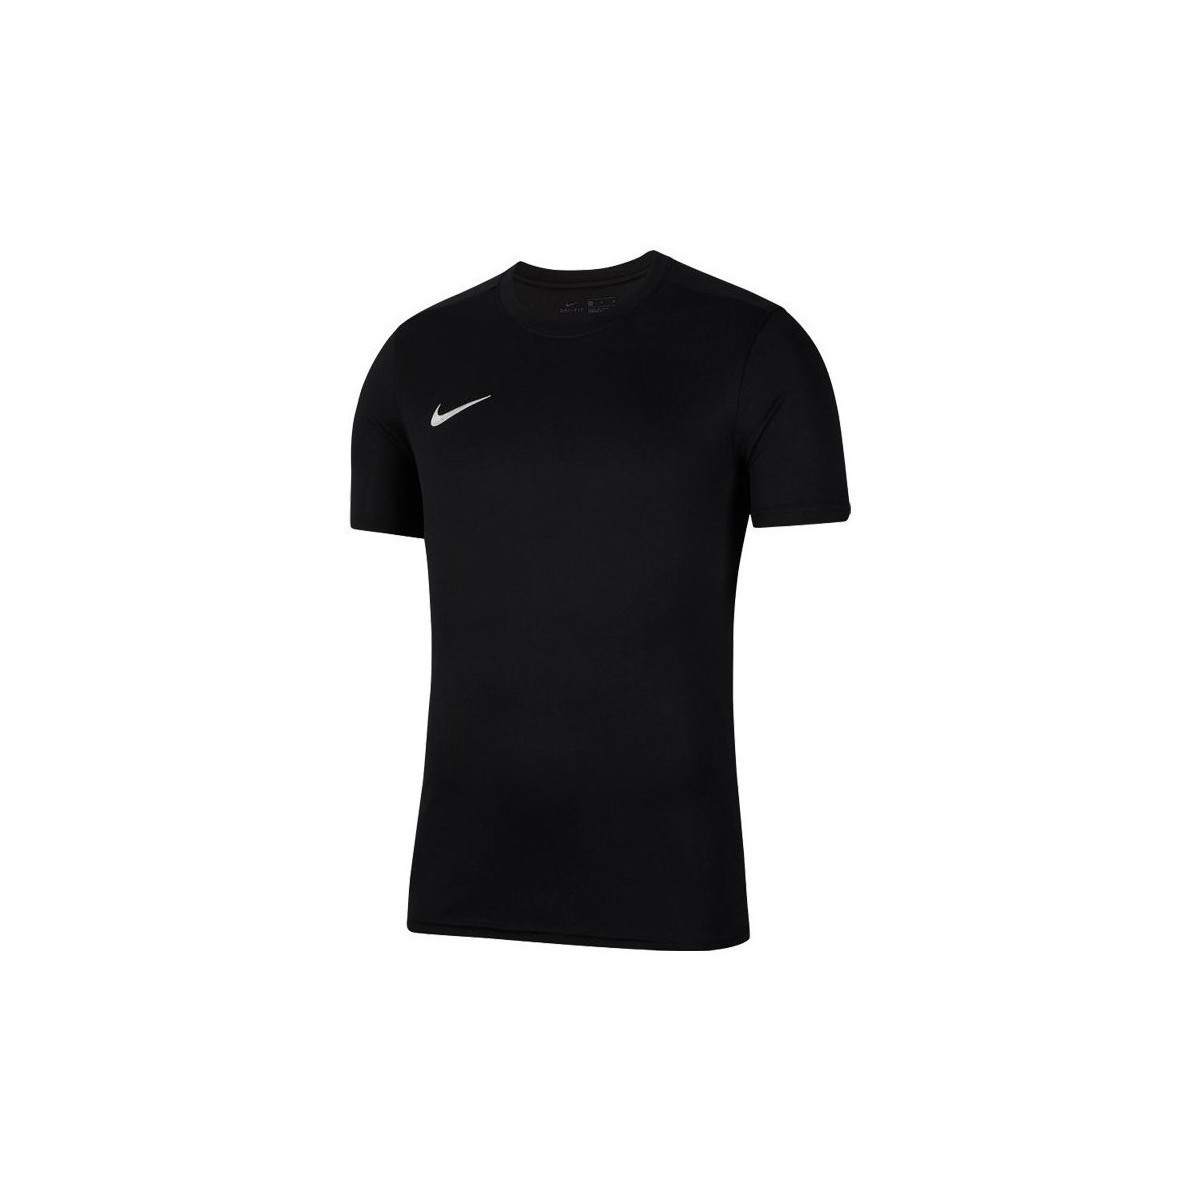 Textil Chlapecké Trička s krátkým rukávem Nike JR Dry Park Vii Černá